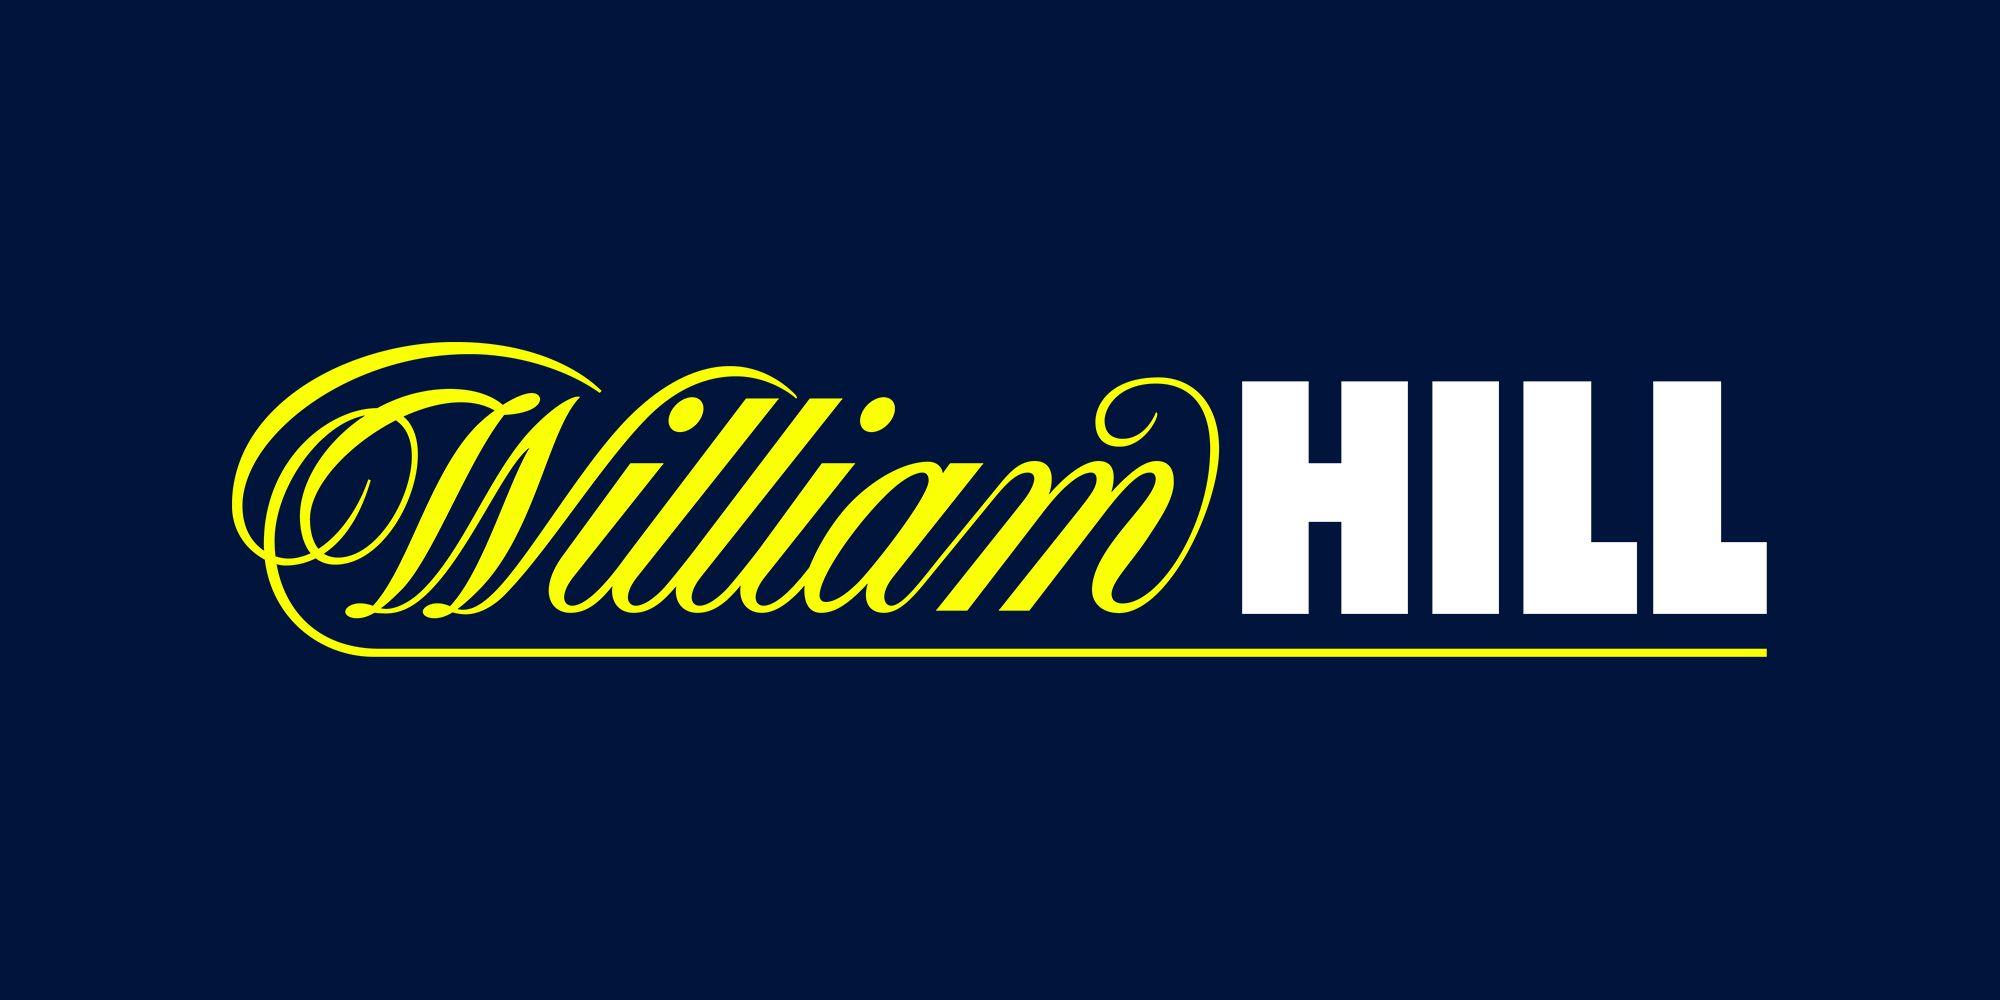 William Logo - William-hill-logo-straight - Aktualac